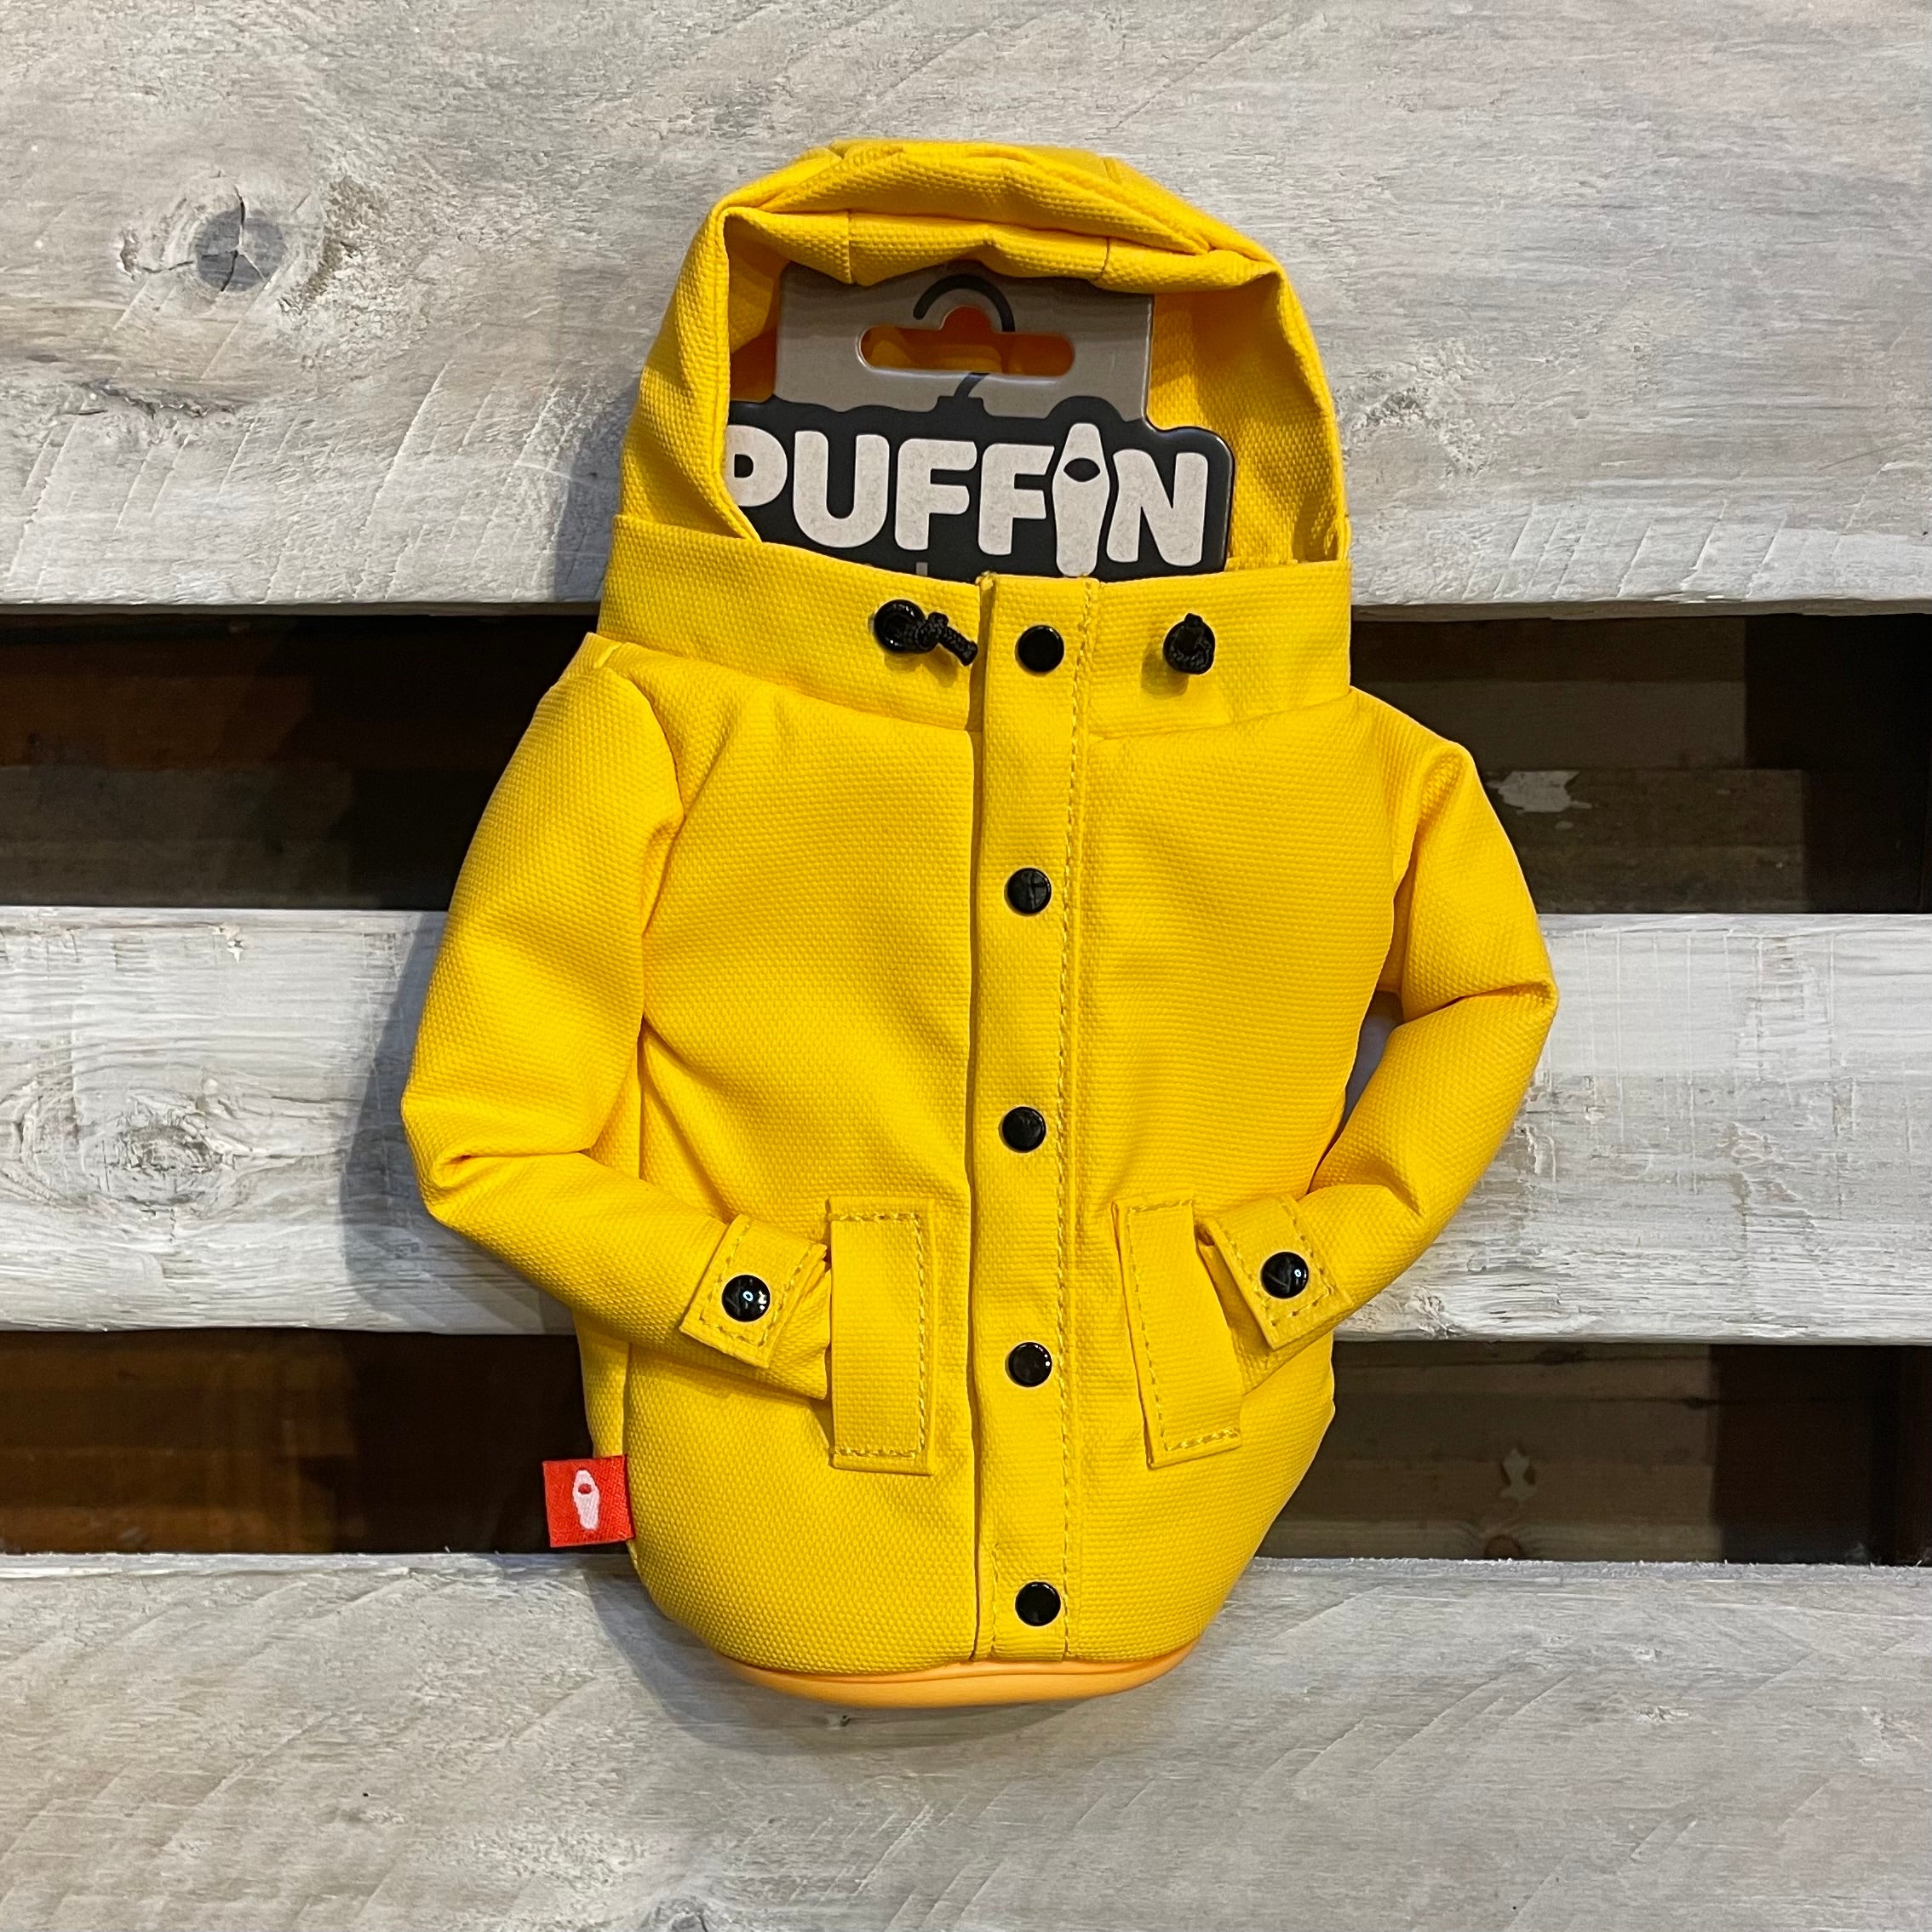 Puffin - Raincoat